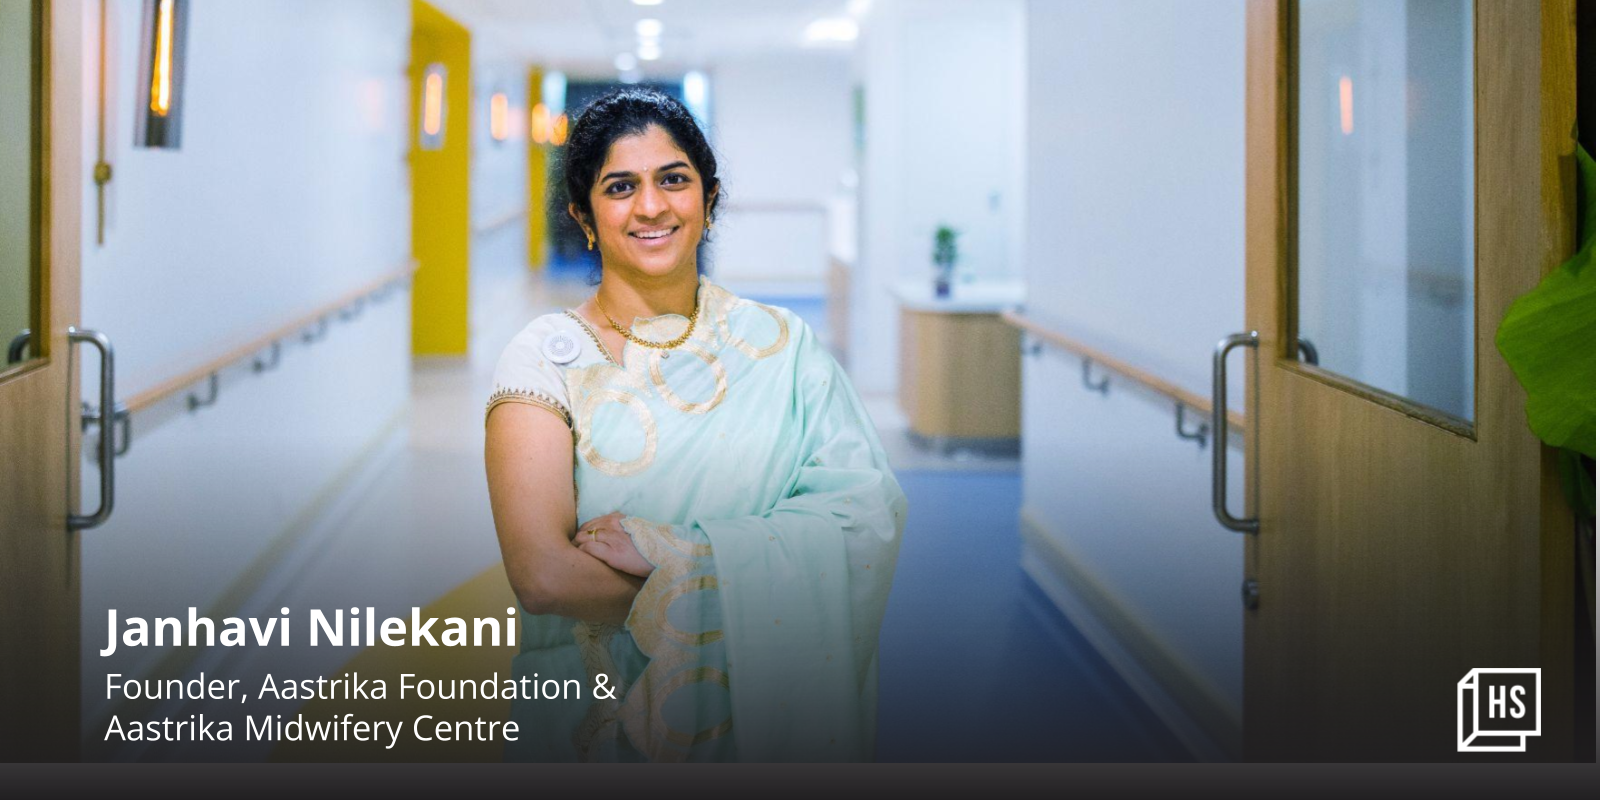 Janhavi Nilekani is giving a big push to midwifery through awareness and training 
